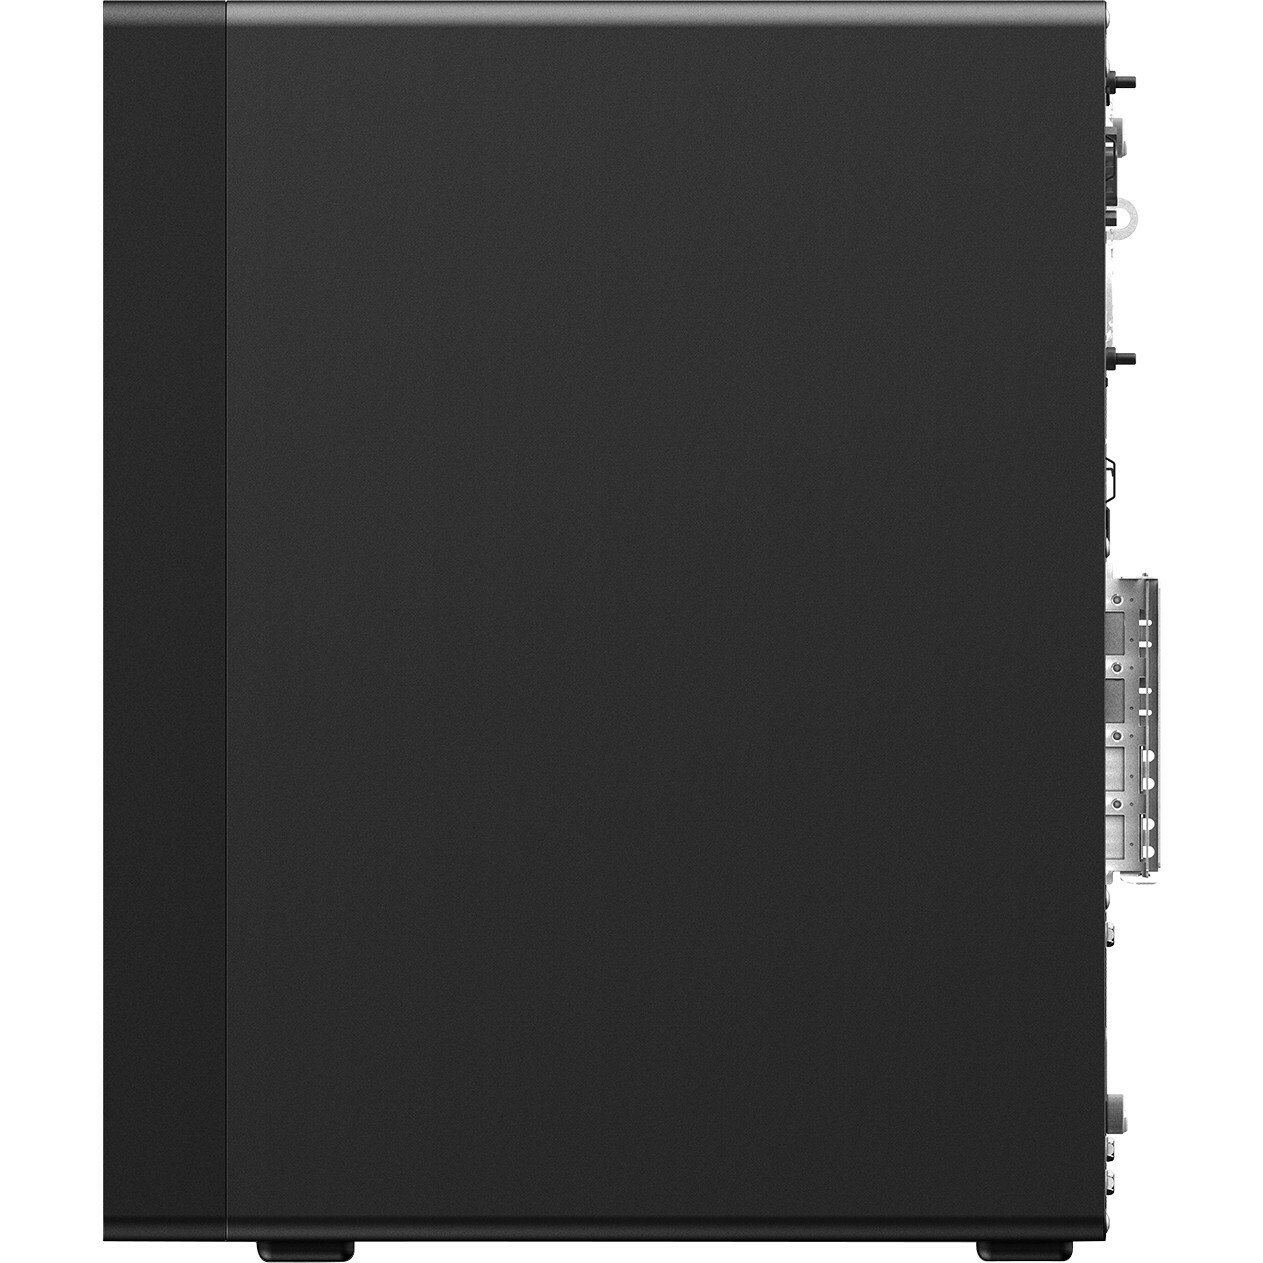 Lenovo ThinkStation P360 30FM0016US Workstation - 1 x Intel Core i7 12th Gen i7-12700 - 16 GB - 512 GB SSD - Tower